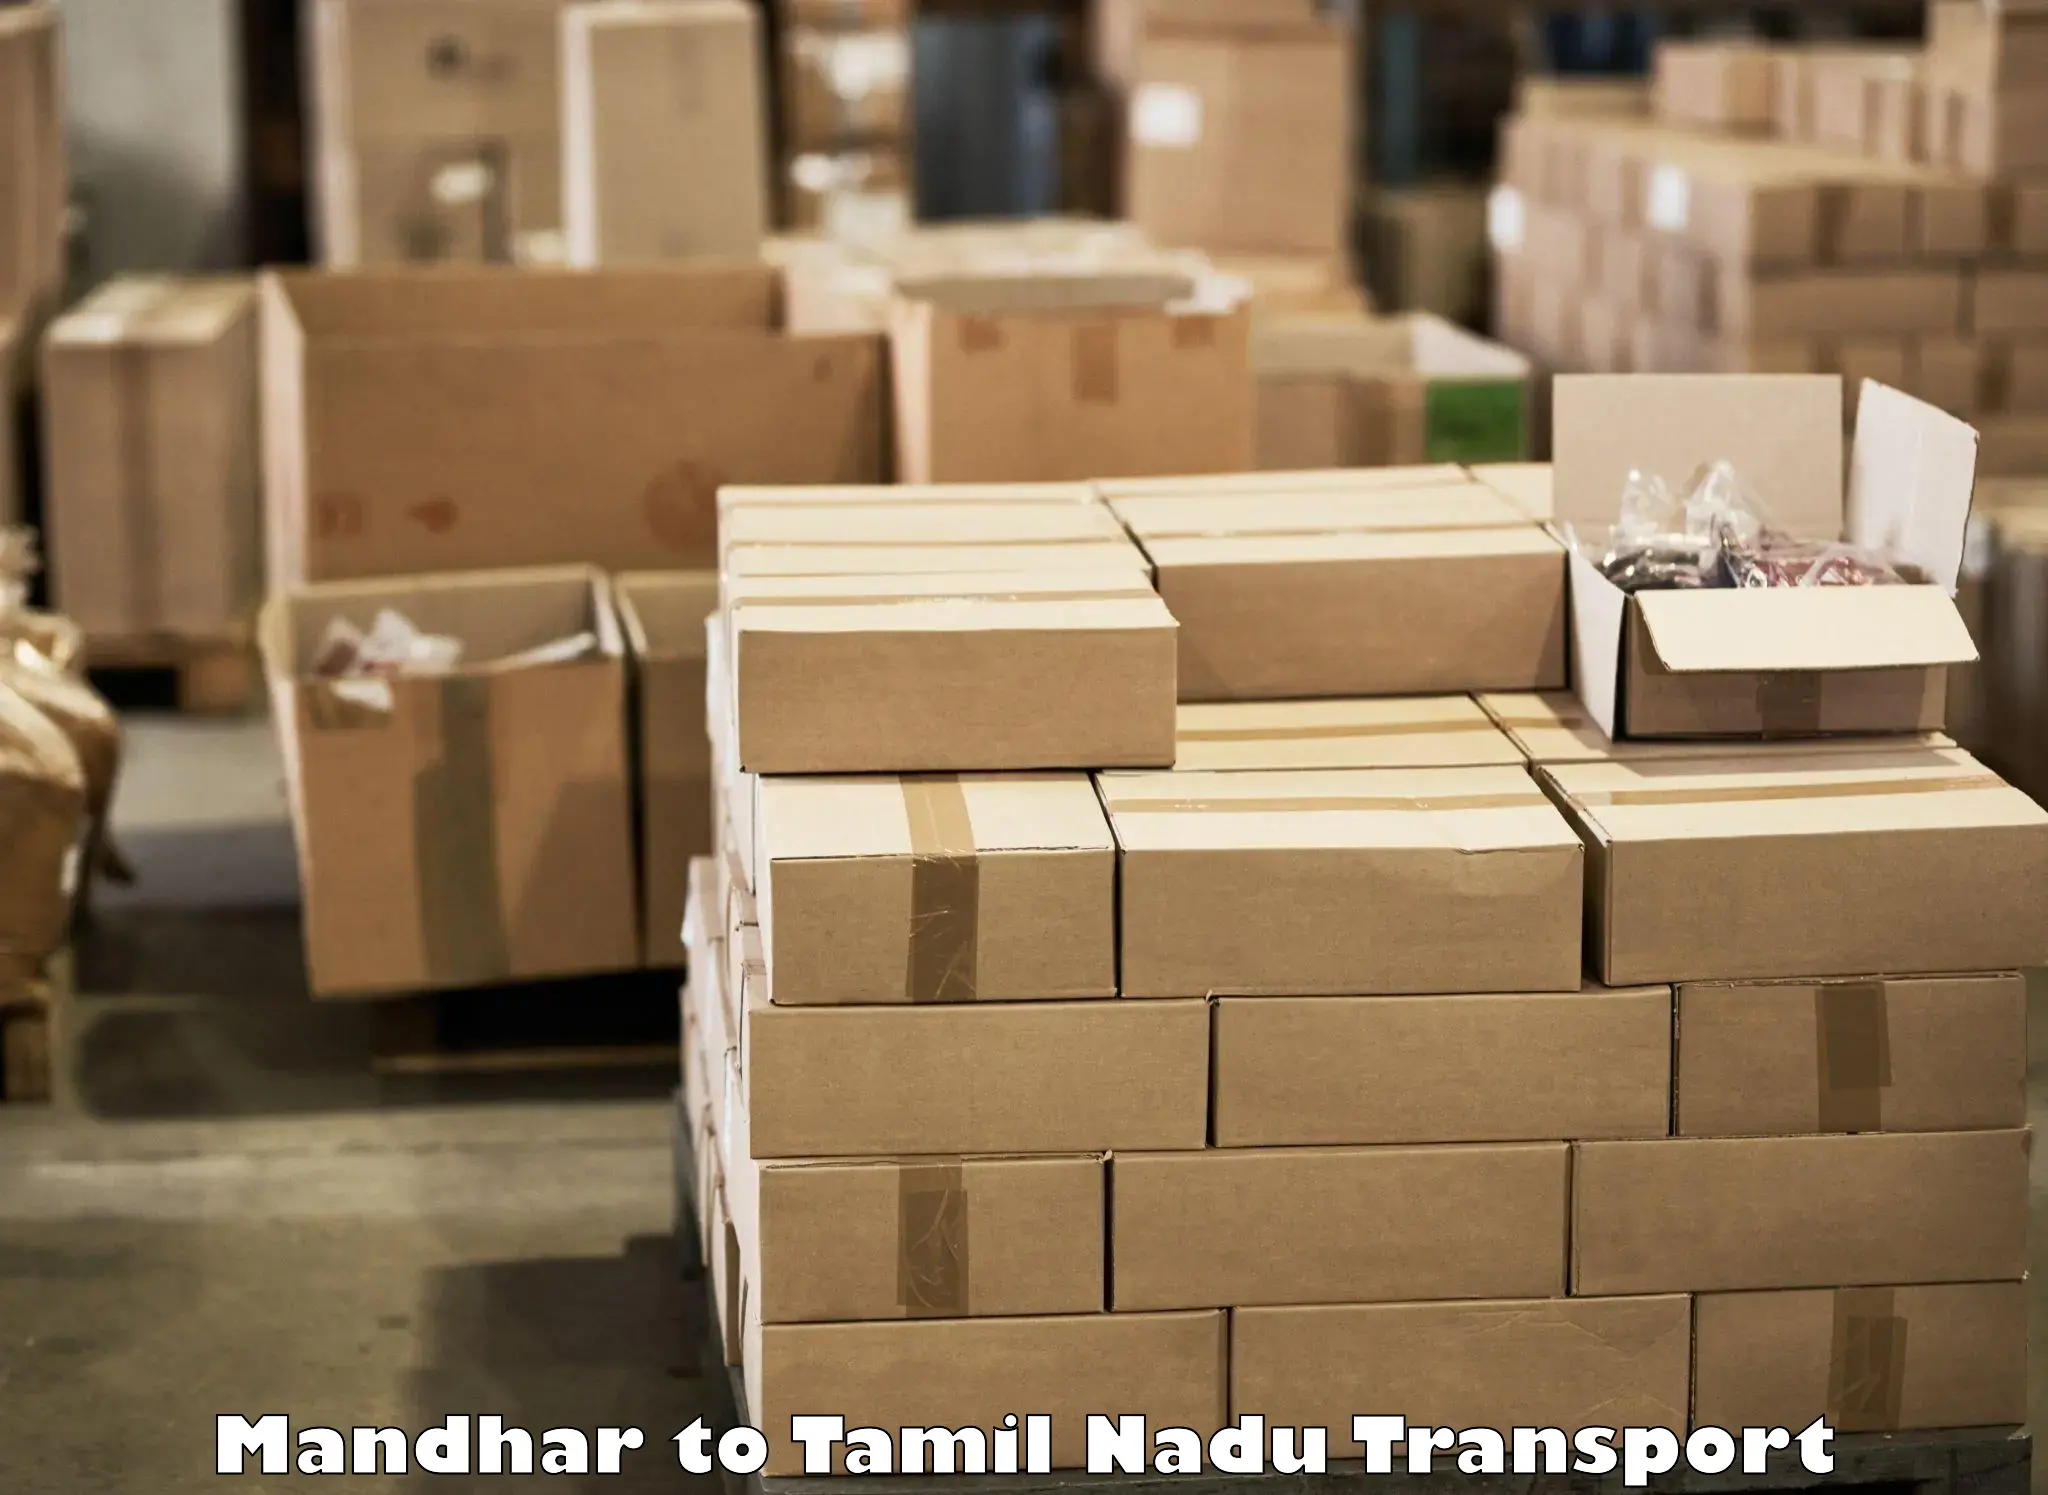 Truck transport companies in India Mandhar to Vickramasingapuram